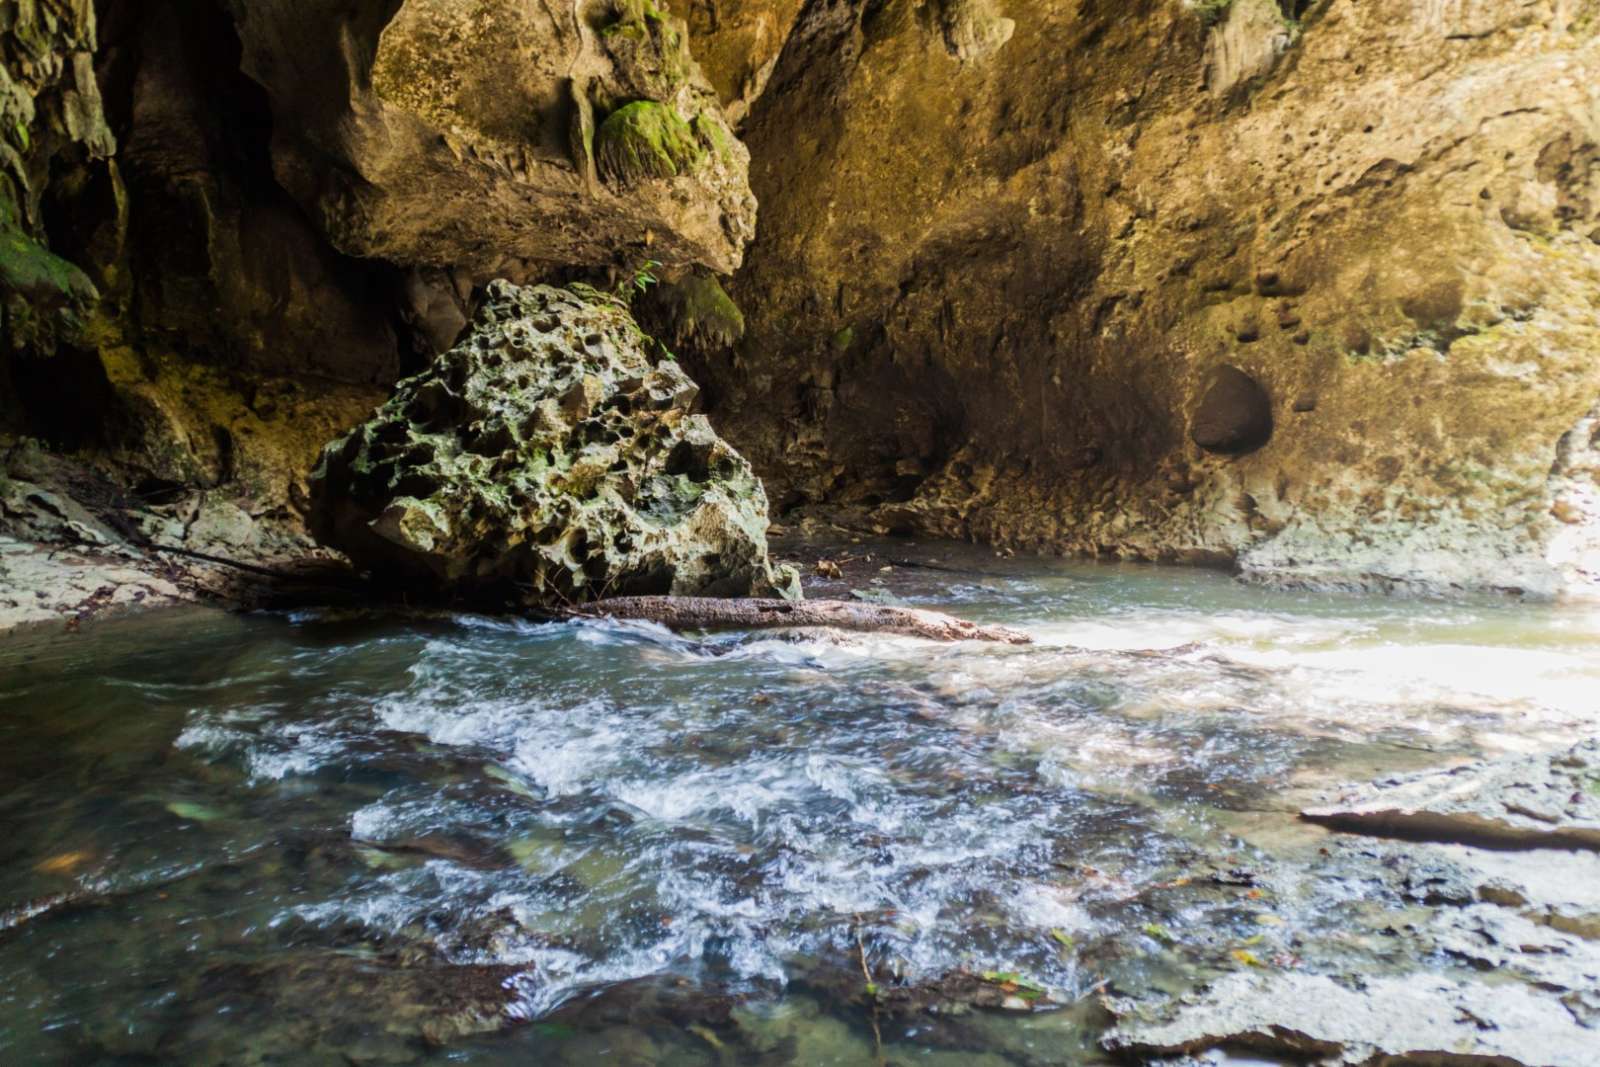 River running through cave at Candelaria, Guatemala